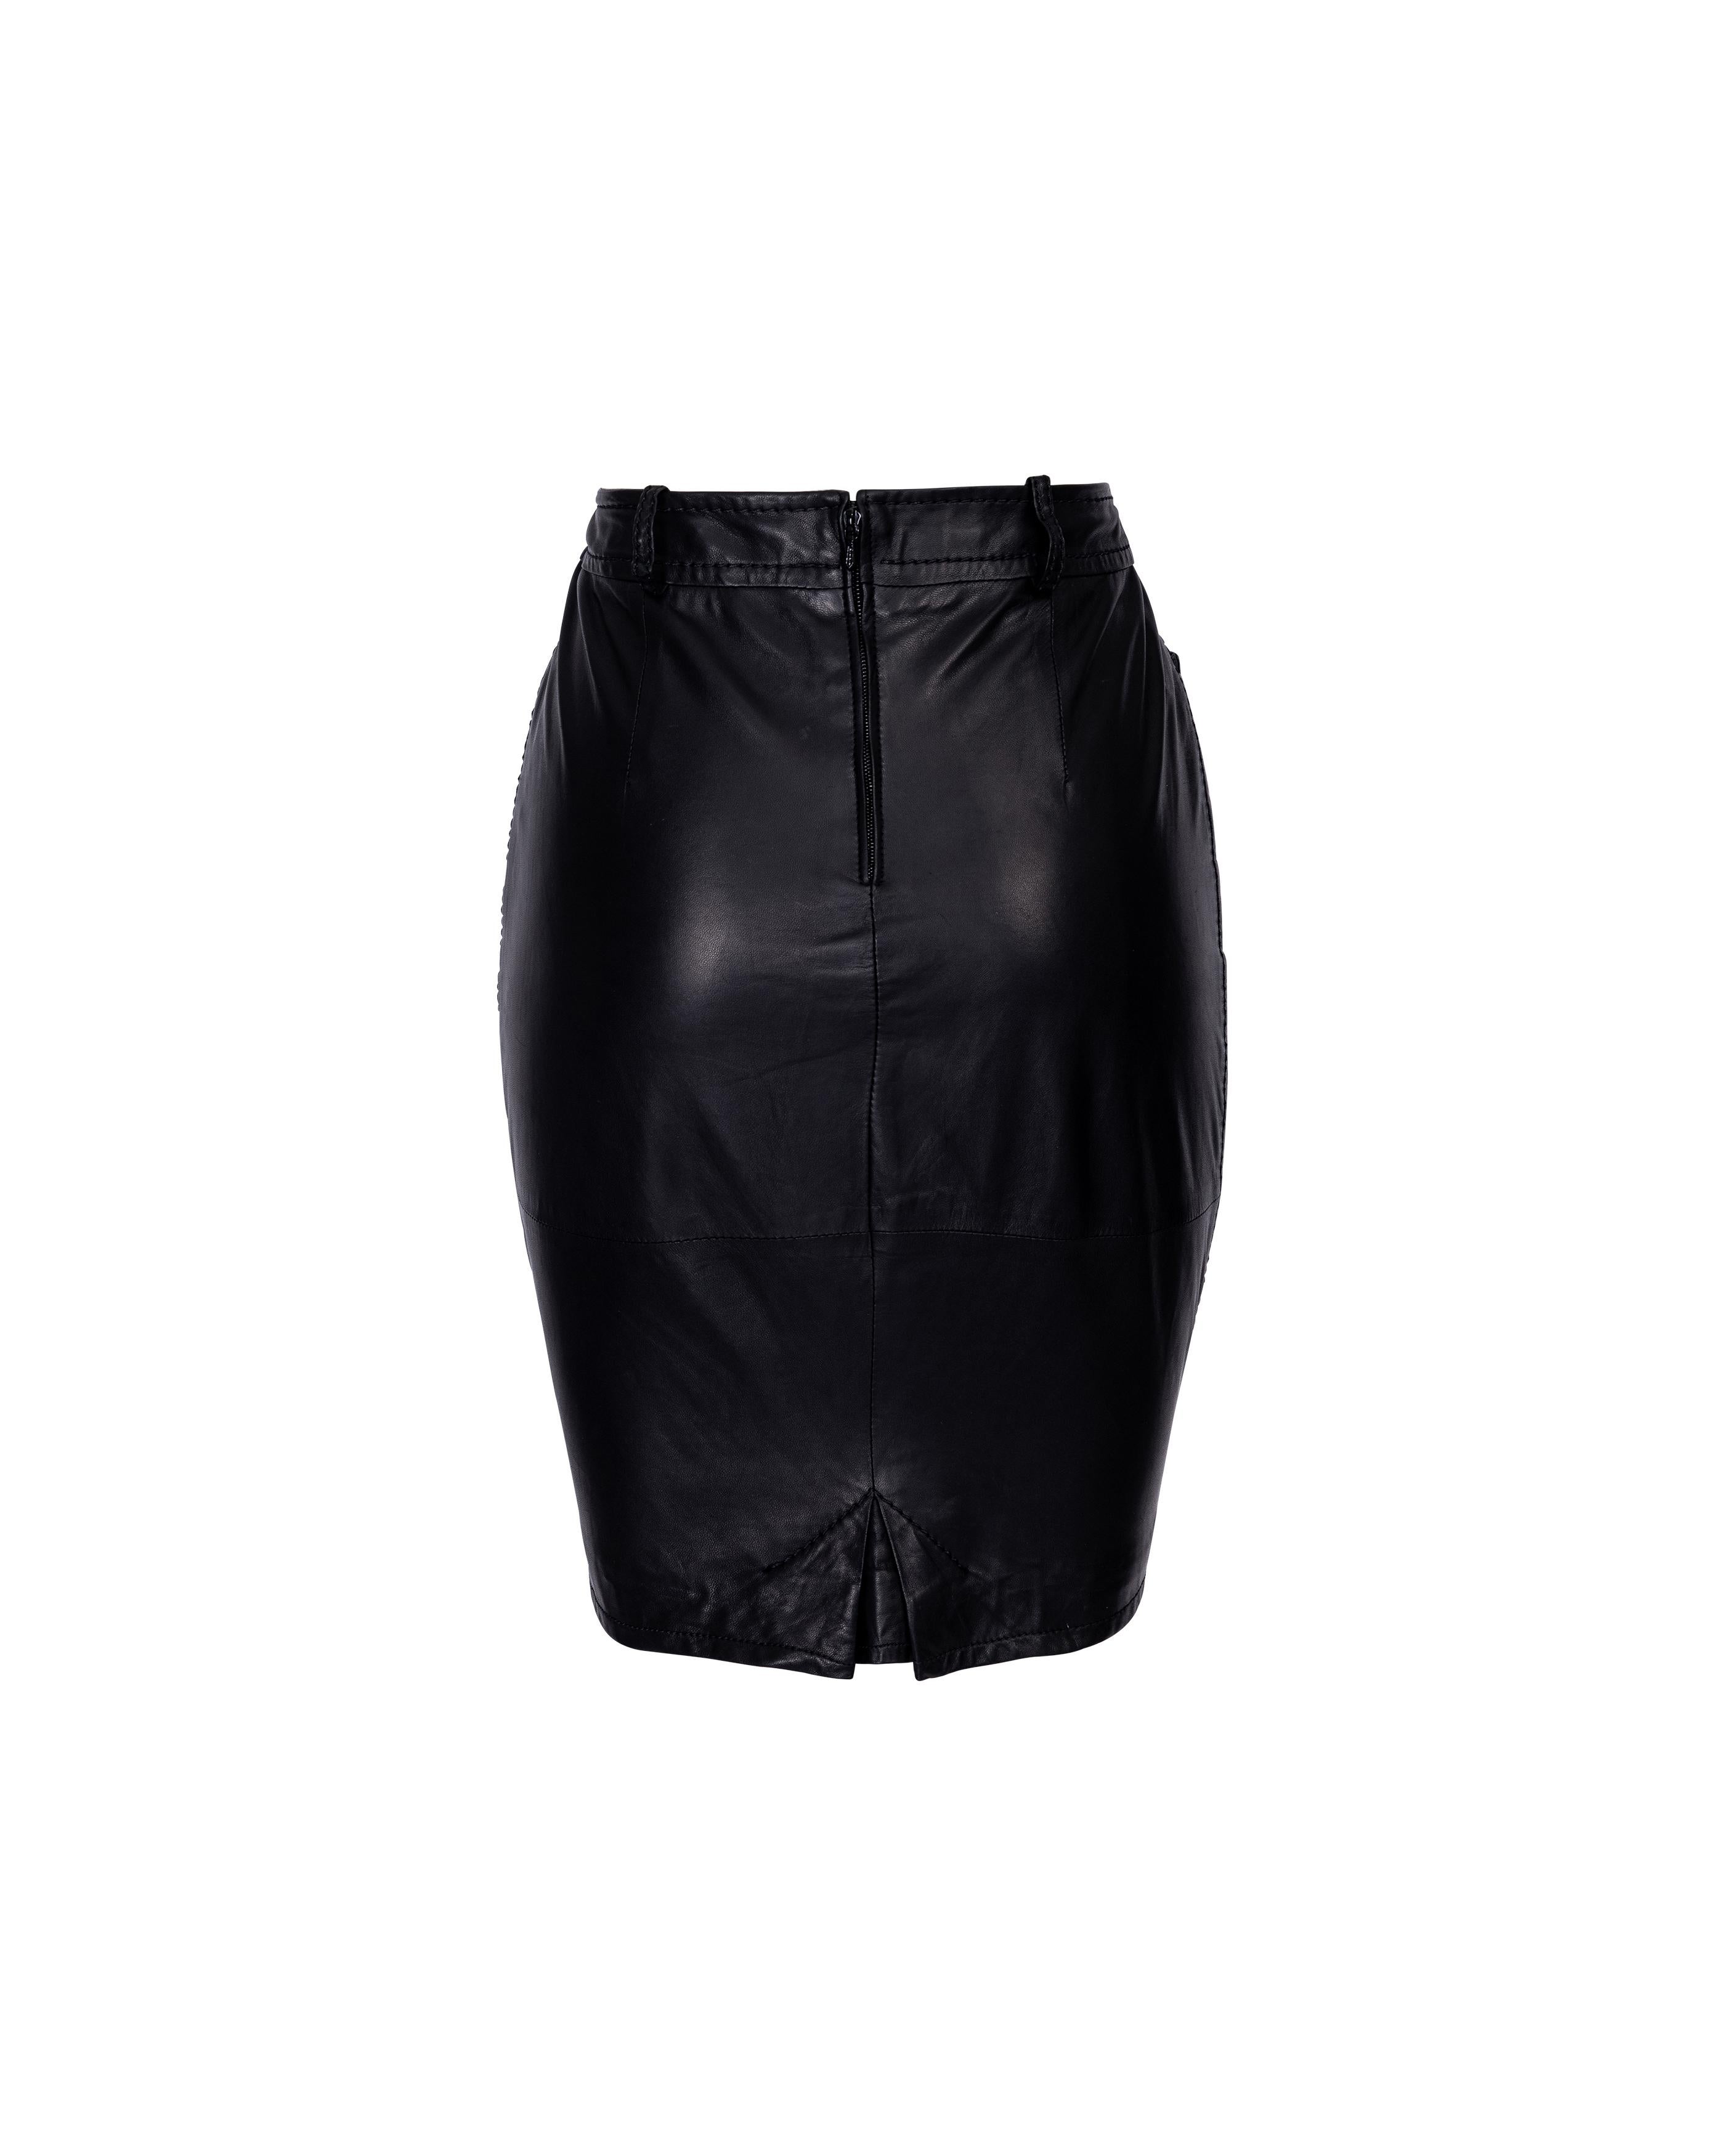 A/W 2005 Christian Dior by John Galliano Black Leather Skirt Set 5